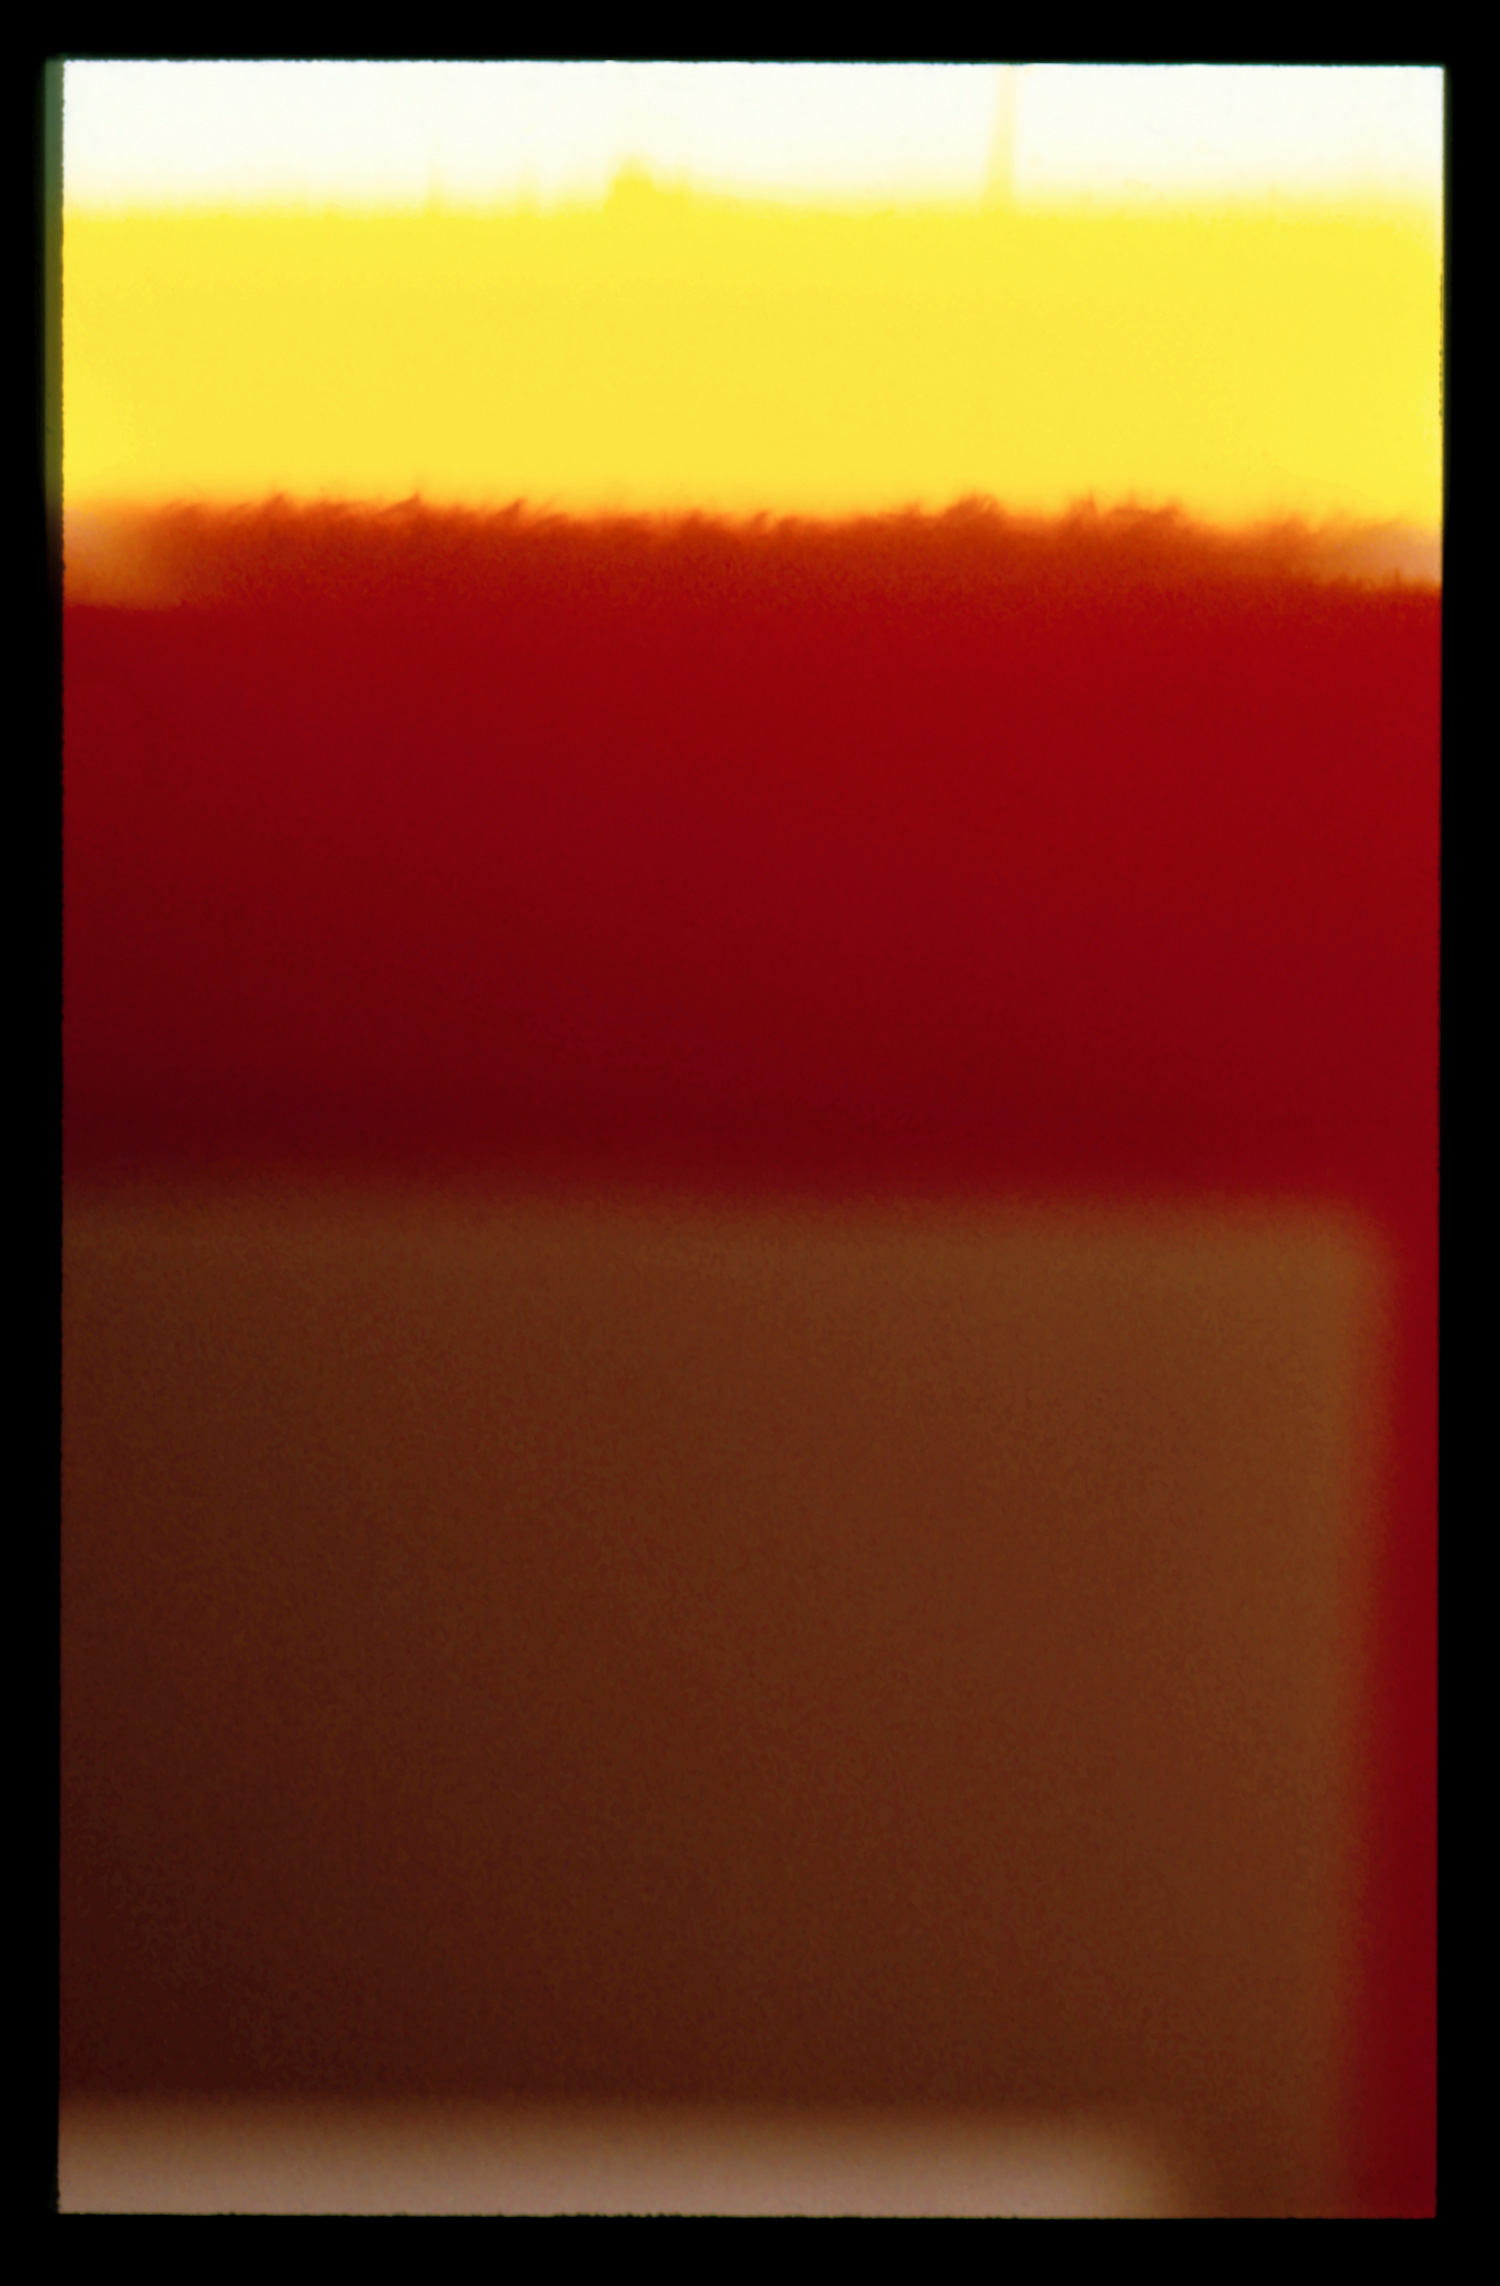   Endings (Rothko died today) - Kodachrome 64, No.21. 26/02/1970  